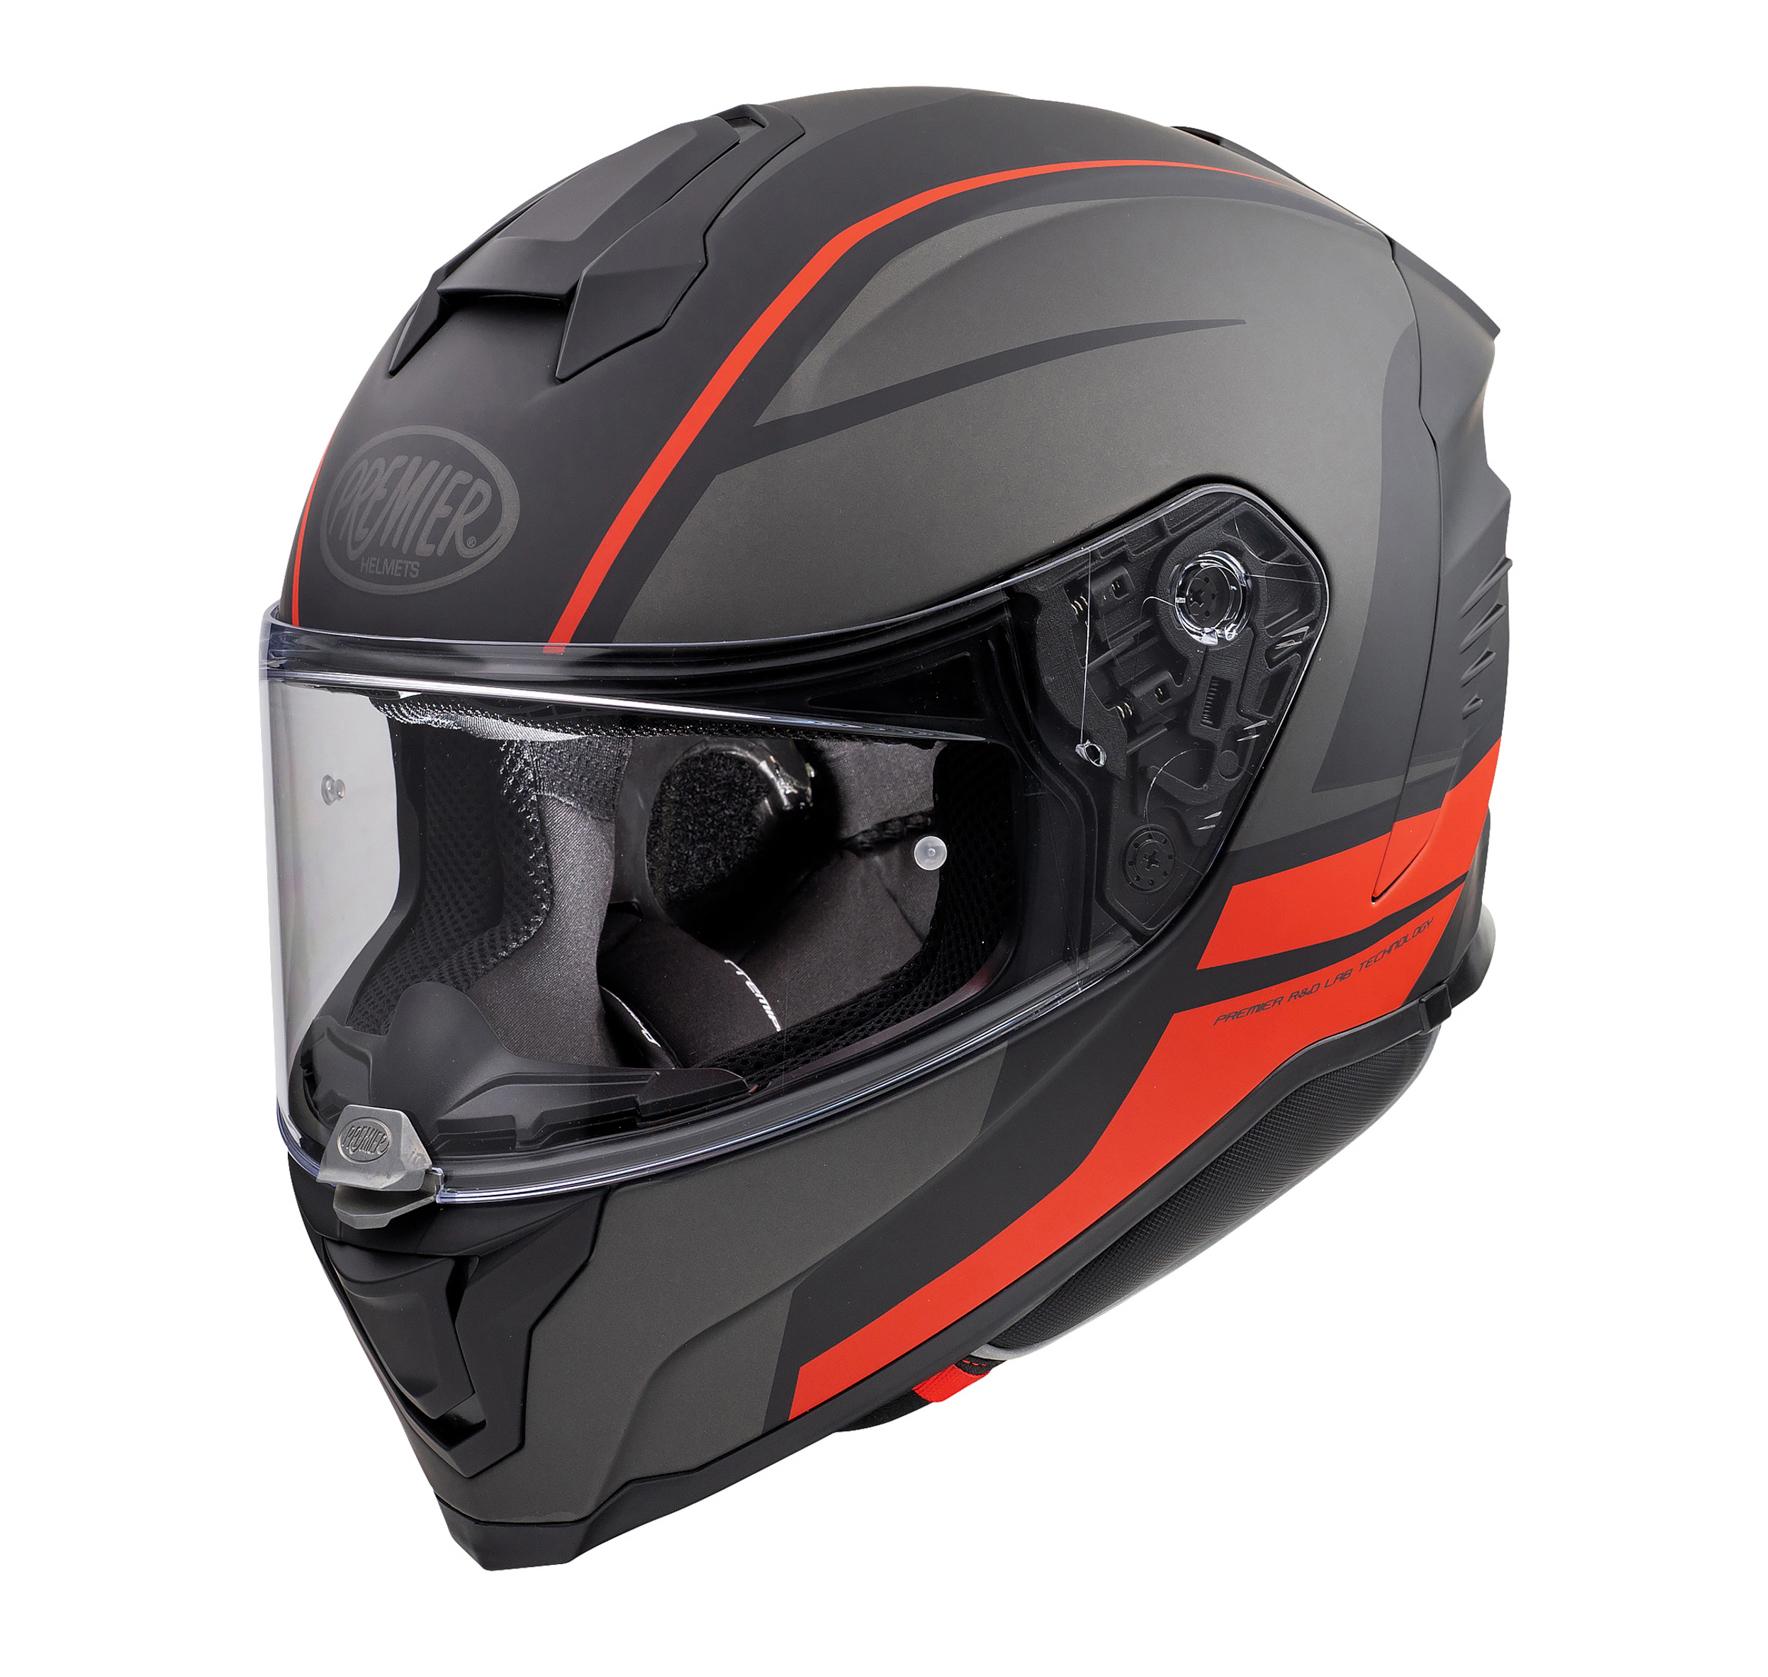 Premier Hyper De Full Face Motorcycle Helmet - Black/Red, L